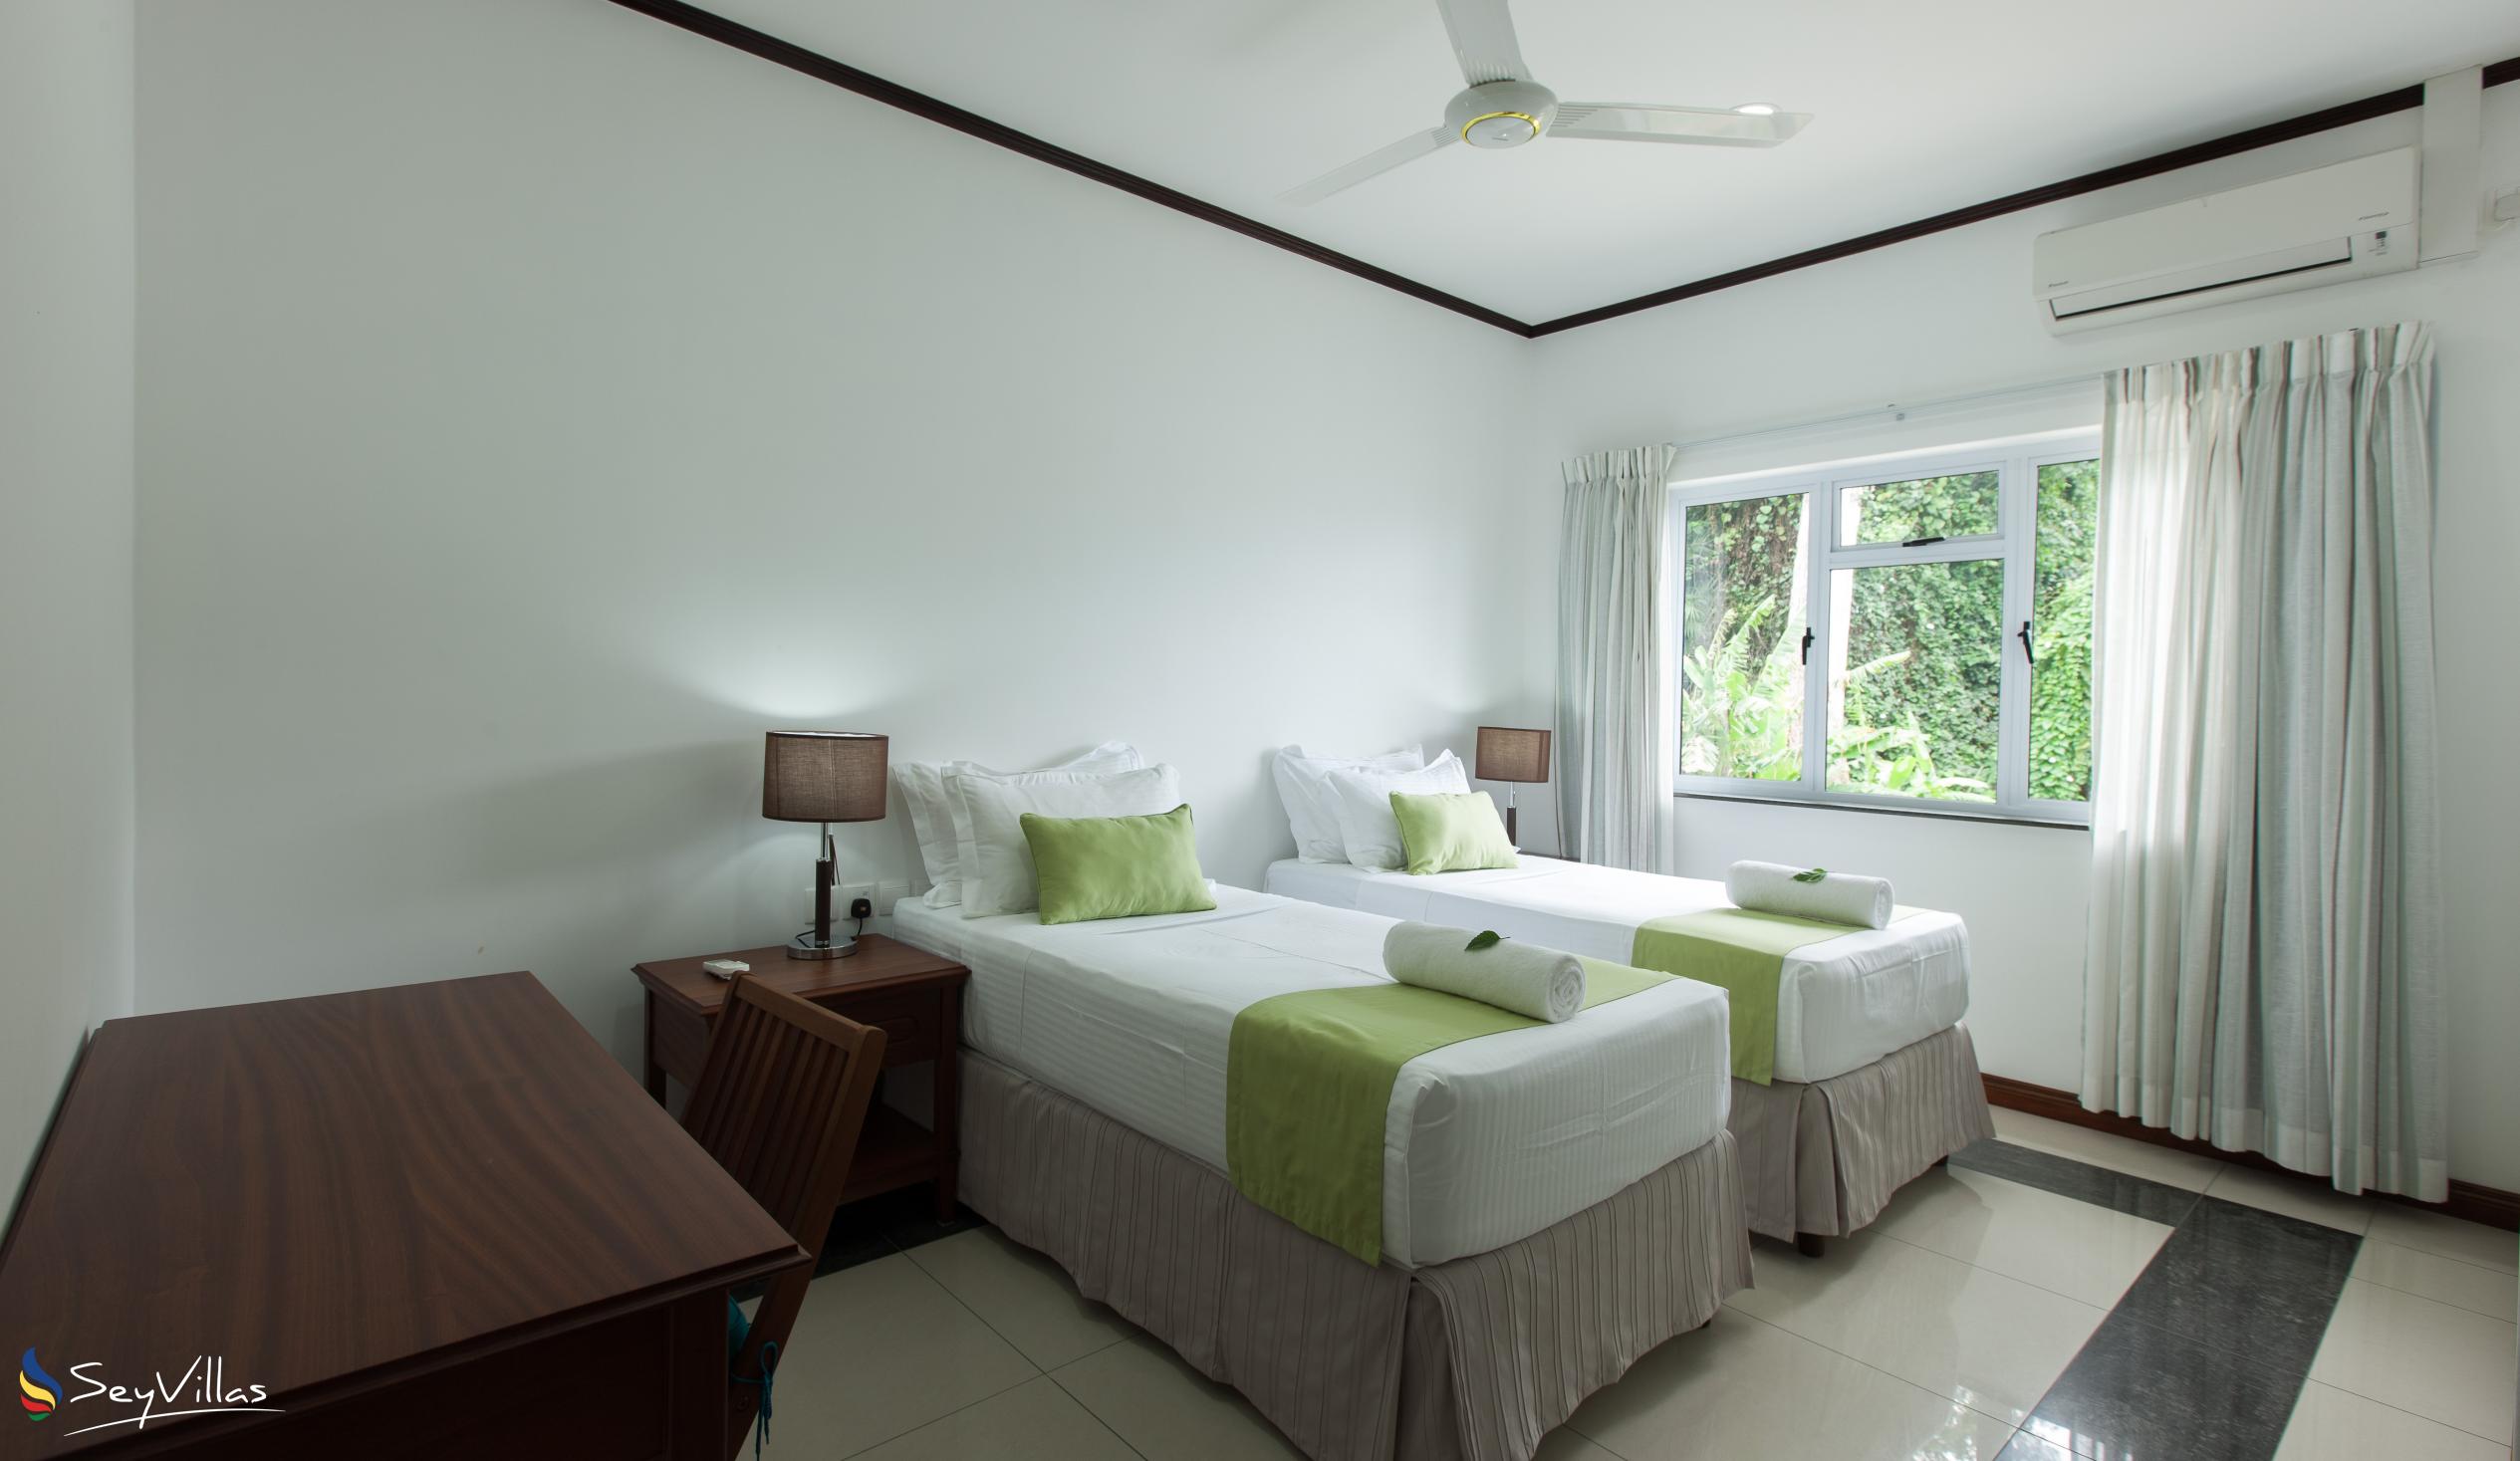 Foto 54: Bambous River Lodge - Appartement mit 2 Schlafzimmern - Mahé (Seychellen)